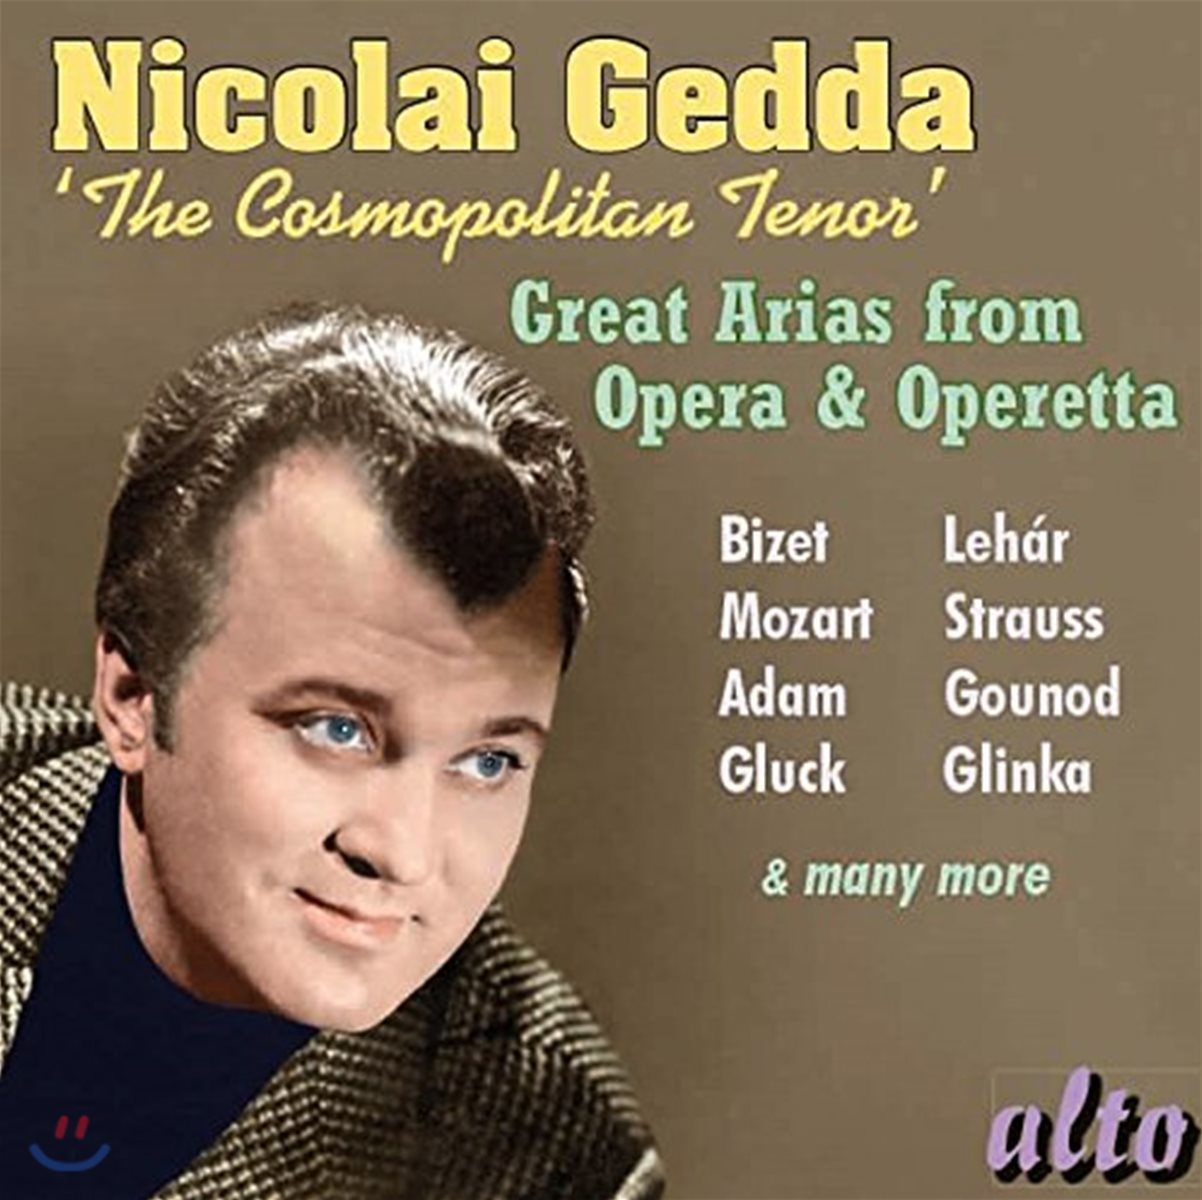 Nicolai Gedda 니콜라이 게다가 노래하는 오페라 & 오페레타 아리아 명곡집 (The Cosmopolitan Tenor - Great Arias from Opera & Operetta)